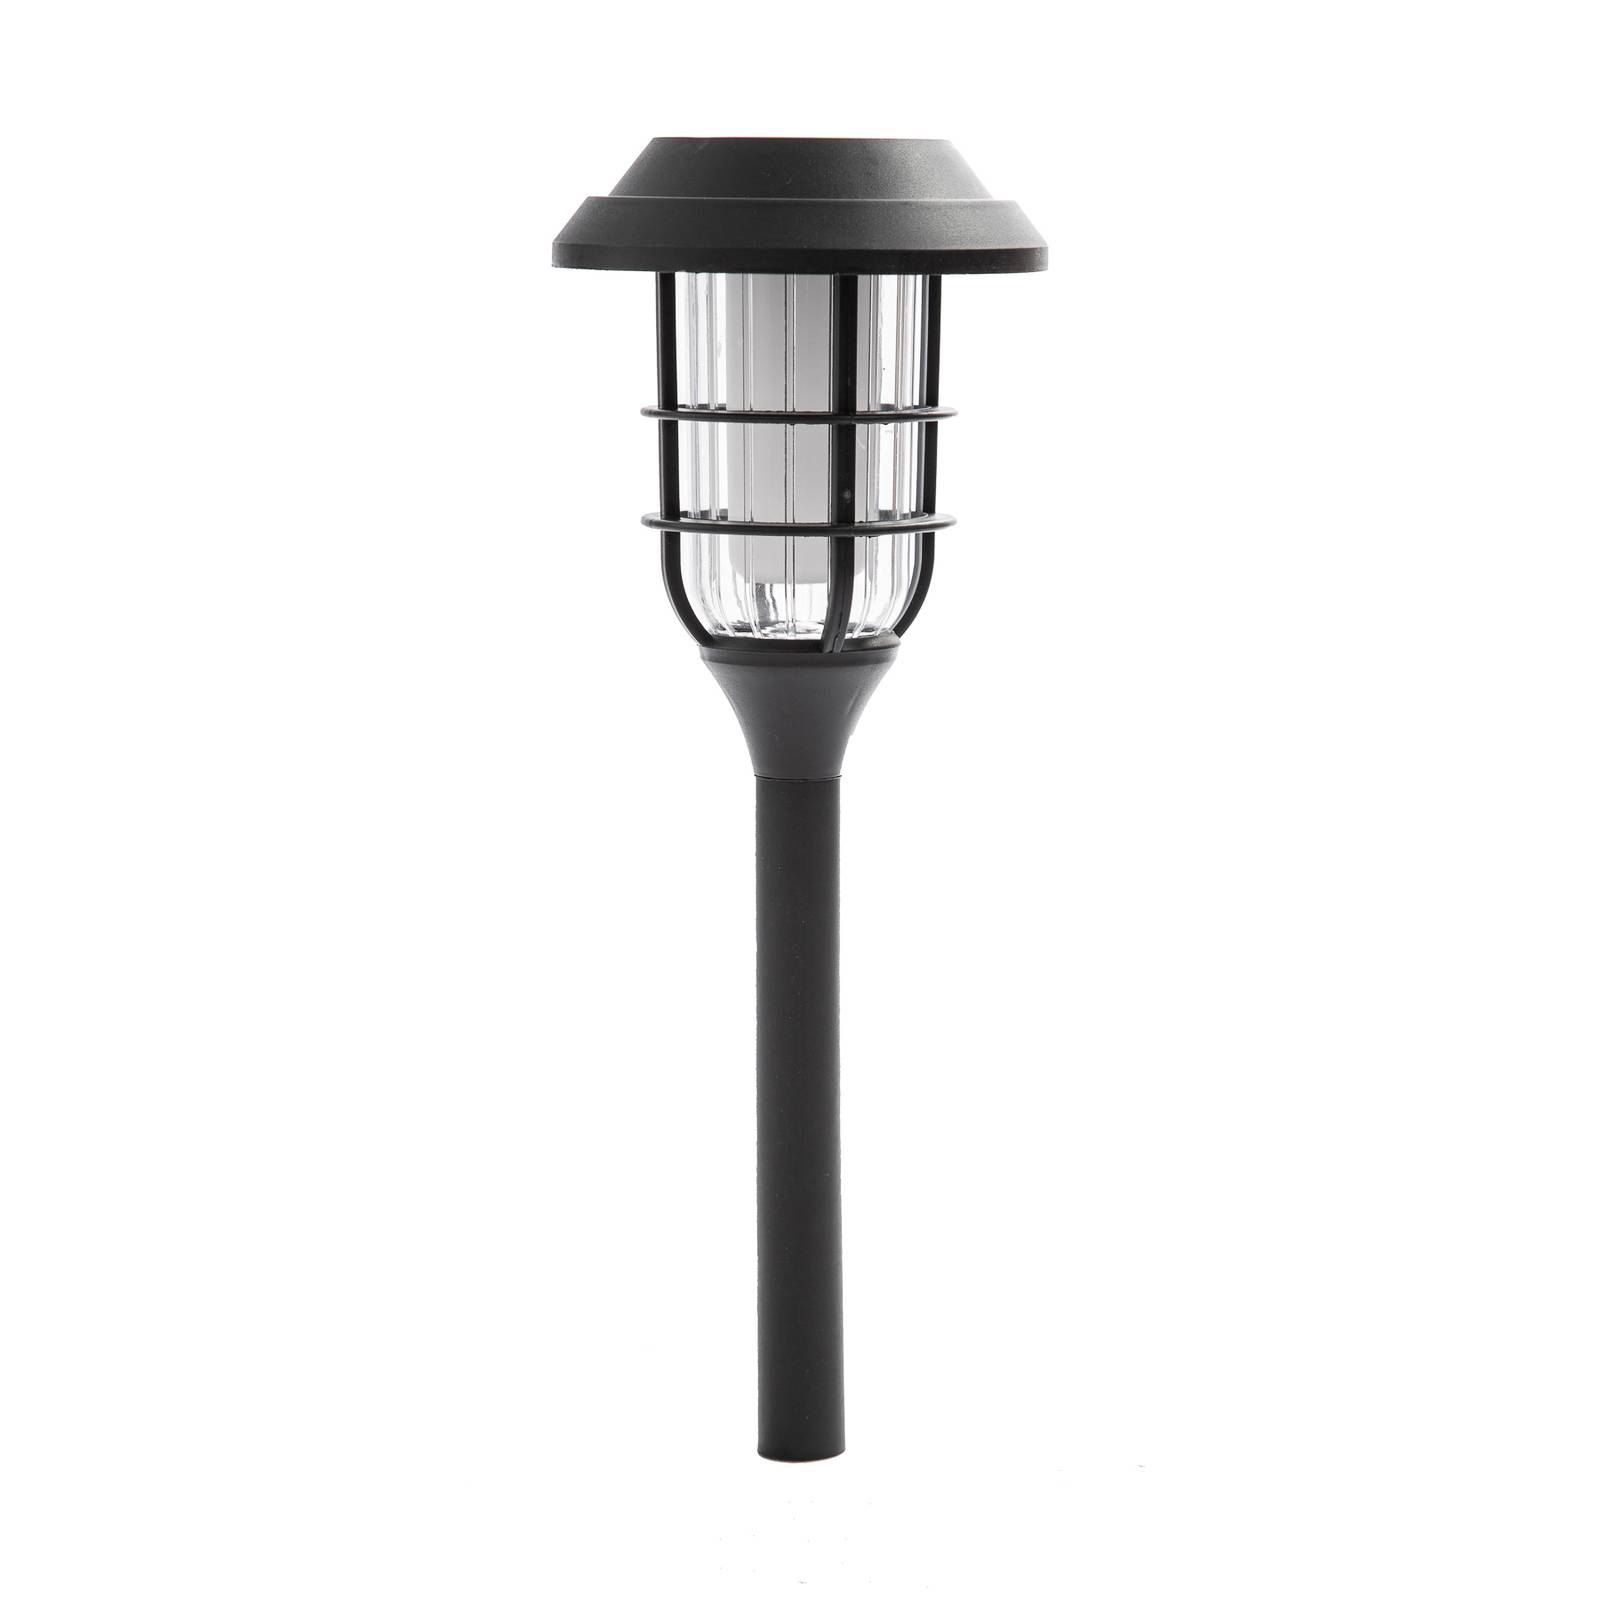 Fano napelemes talapzati LED, fekete, 3-as szett